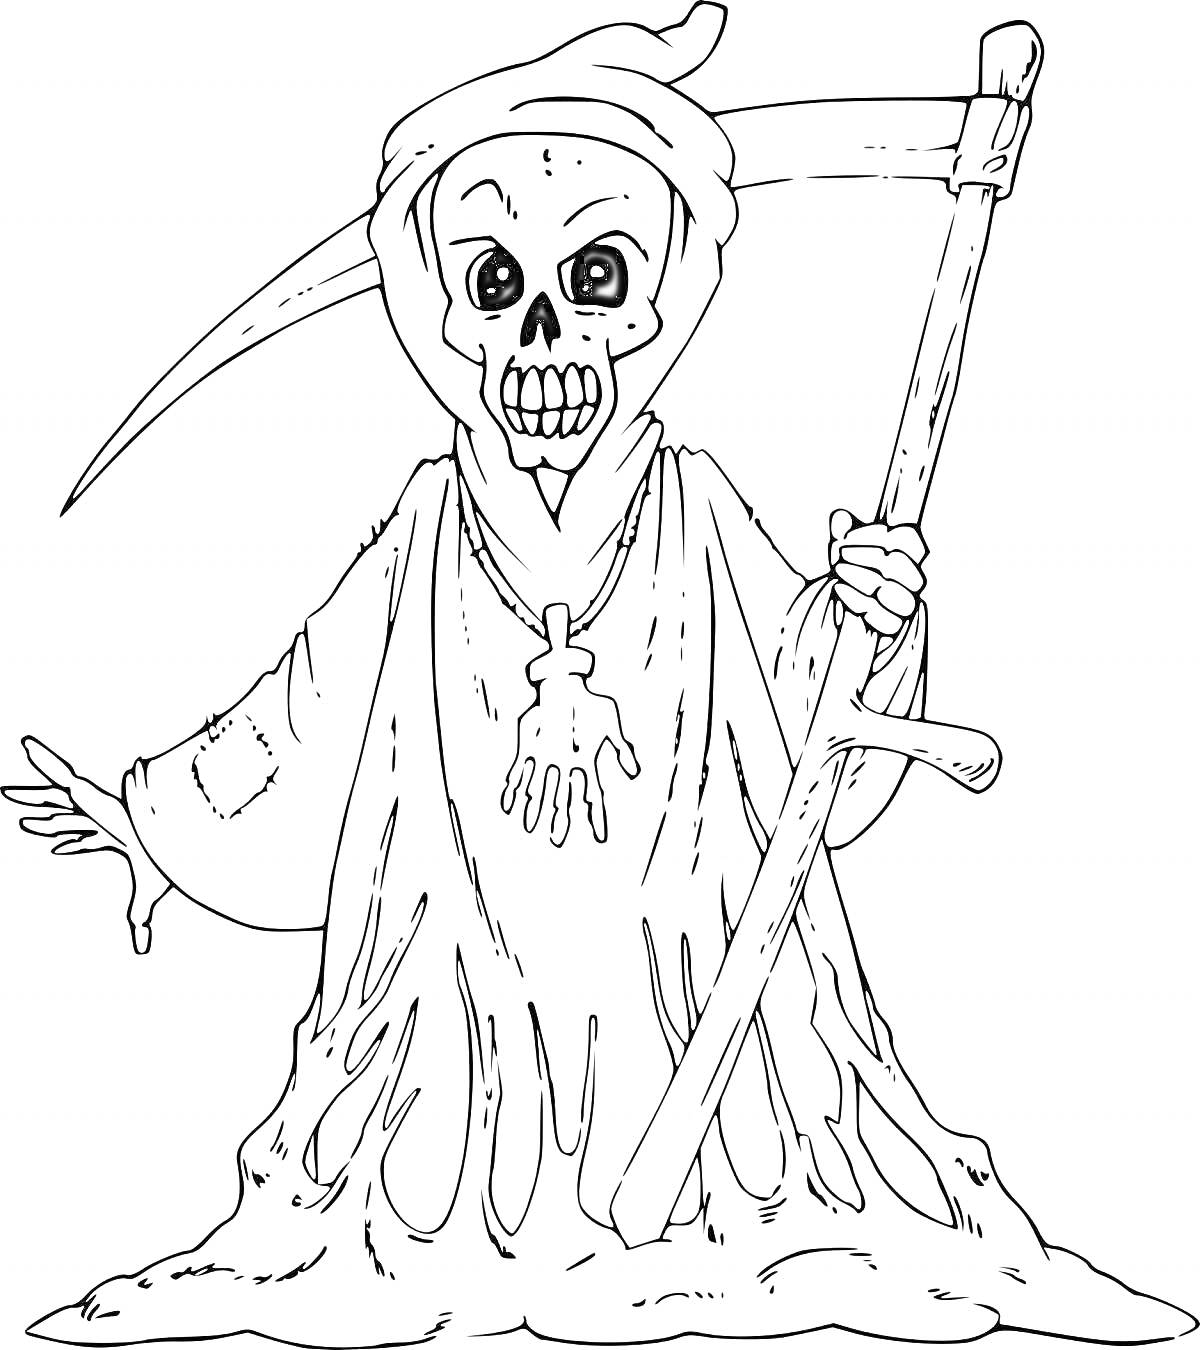 Раскраска Скелет в мантии с косой